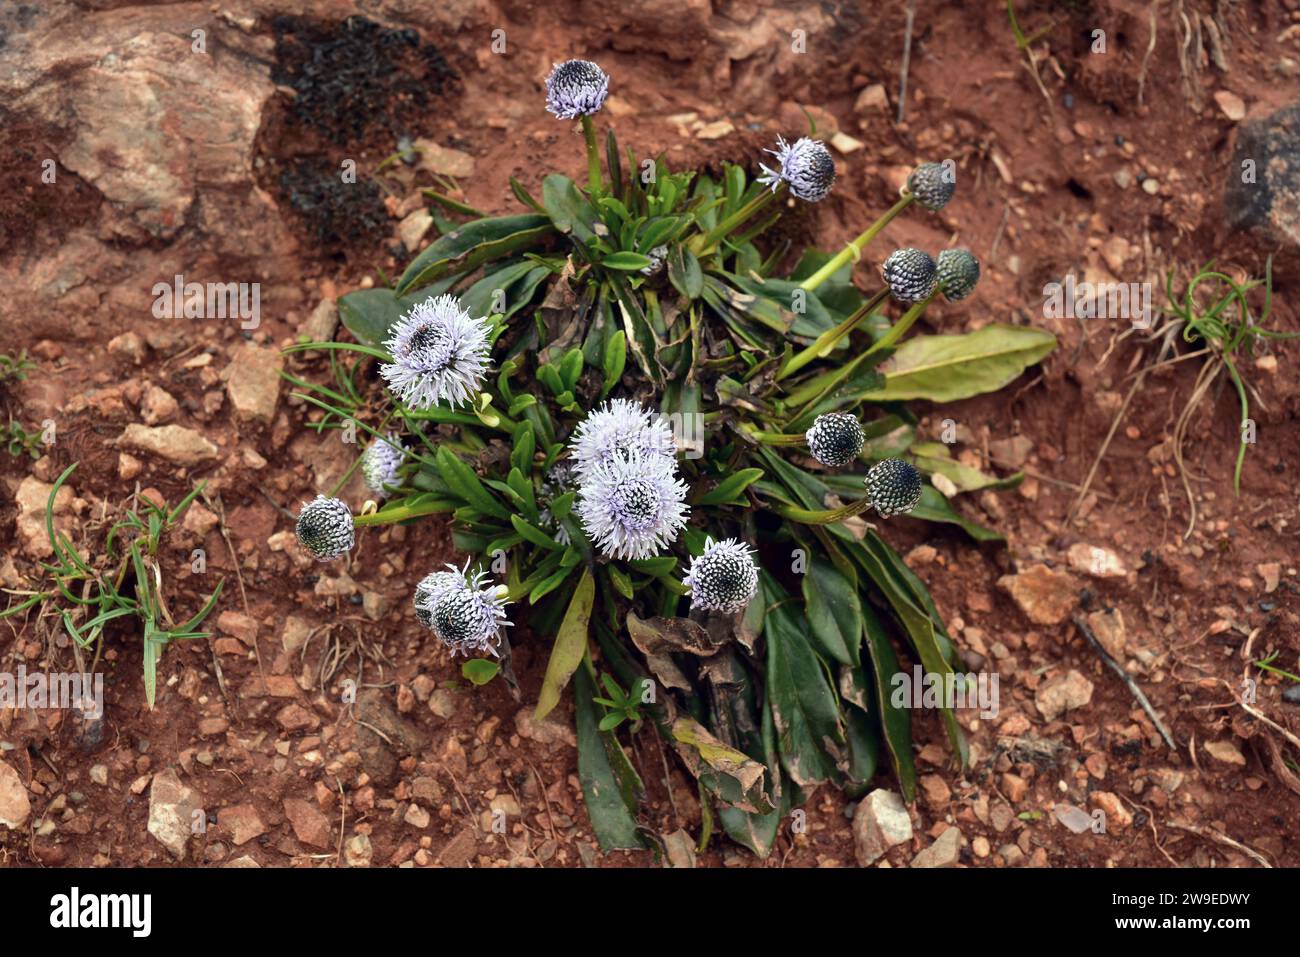 Globe daisy (Globularia nudicaulis or Globularia alpina) is a perennial herb native to Europe mountains (Alps, Pyrenees and Cantabrian Mountains). Thi Stock Photo